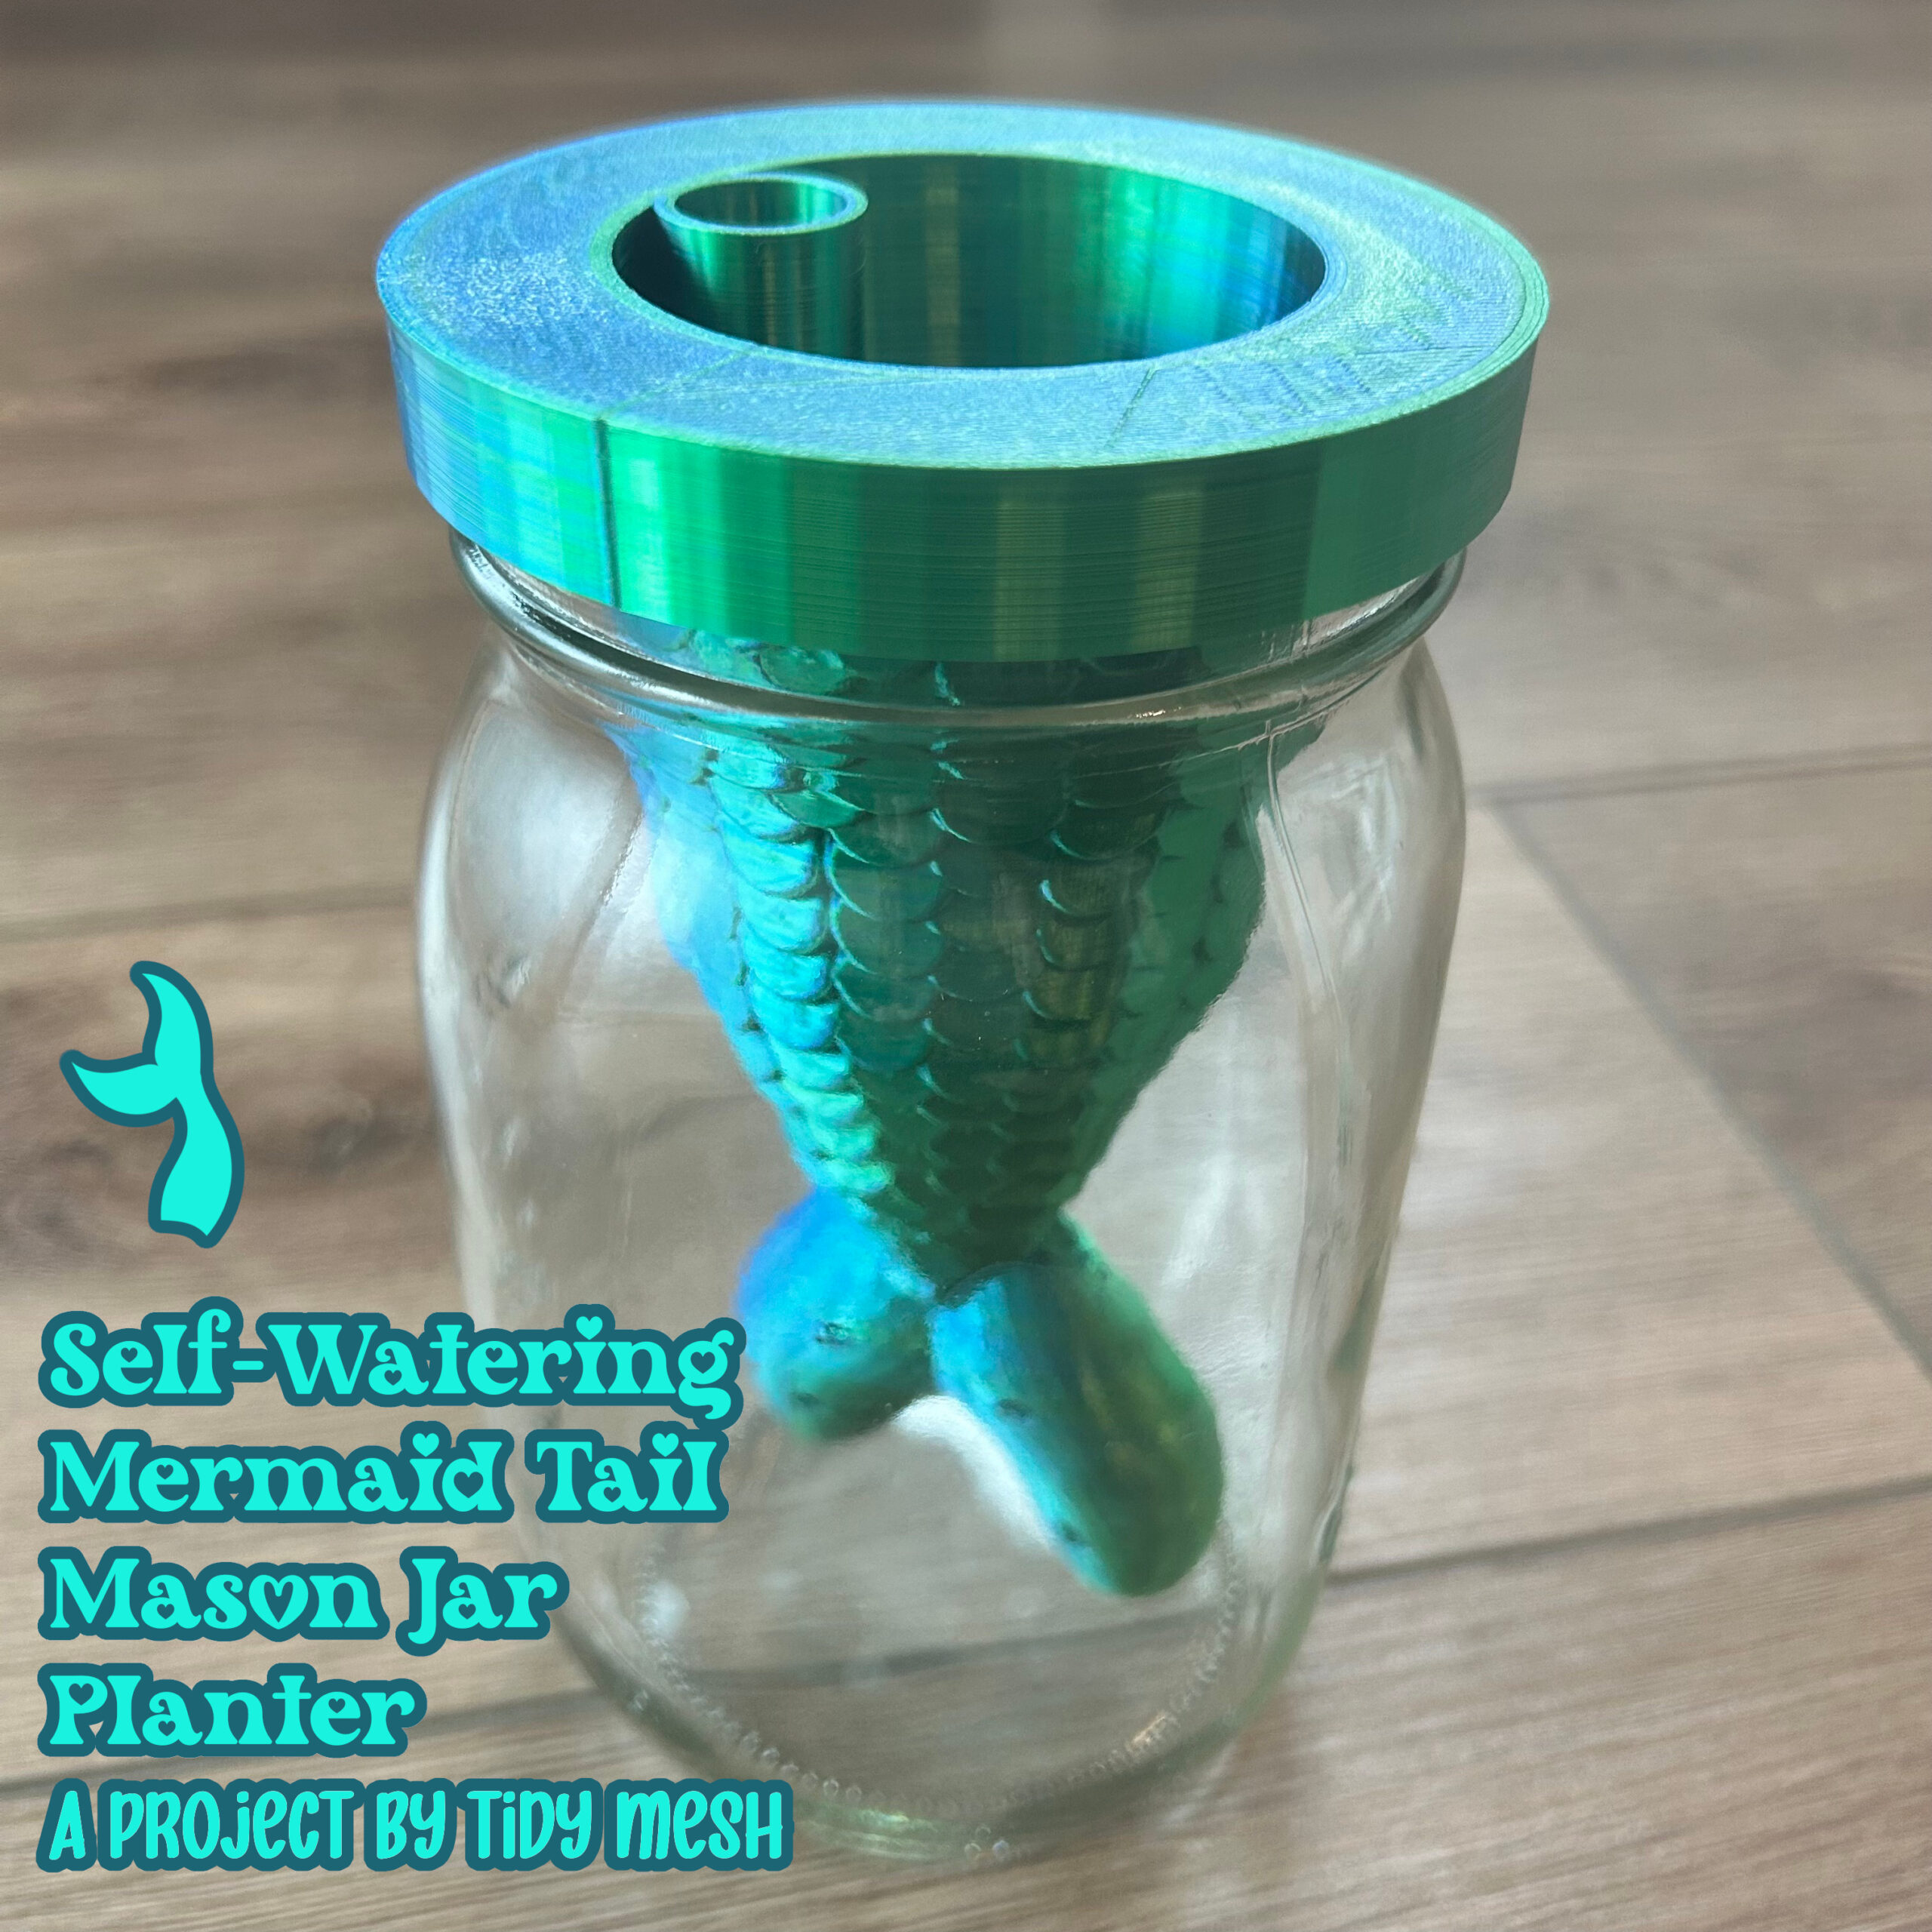 Self-Watering Mermaid Tail Mason Jar Planter